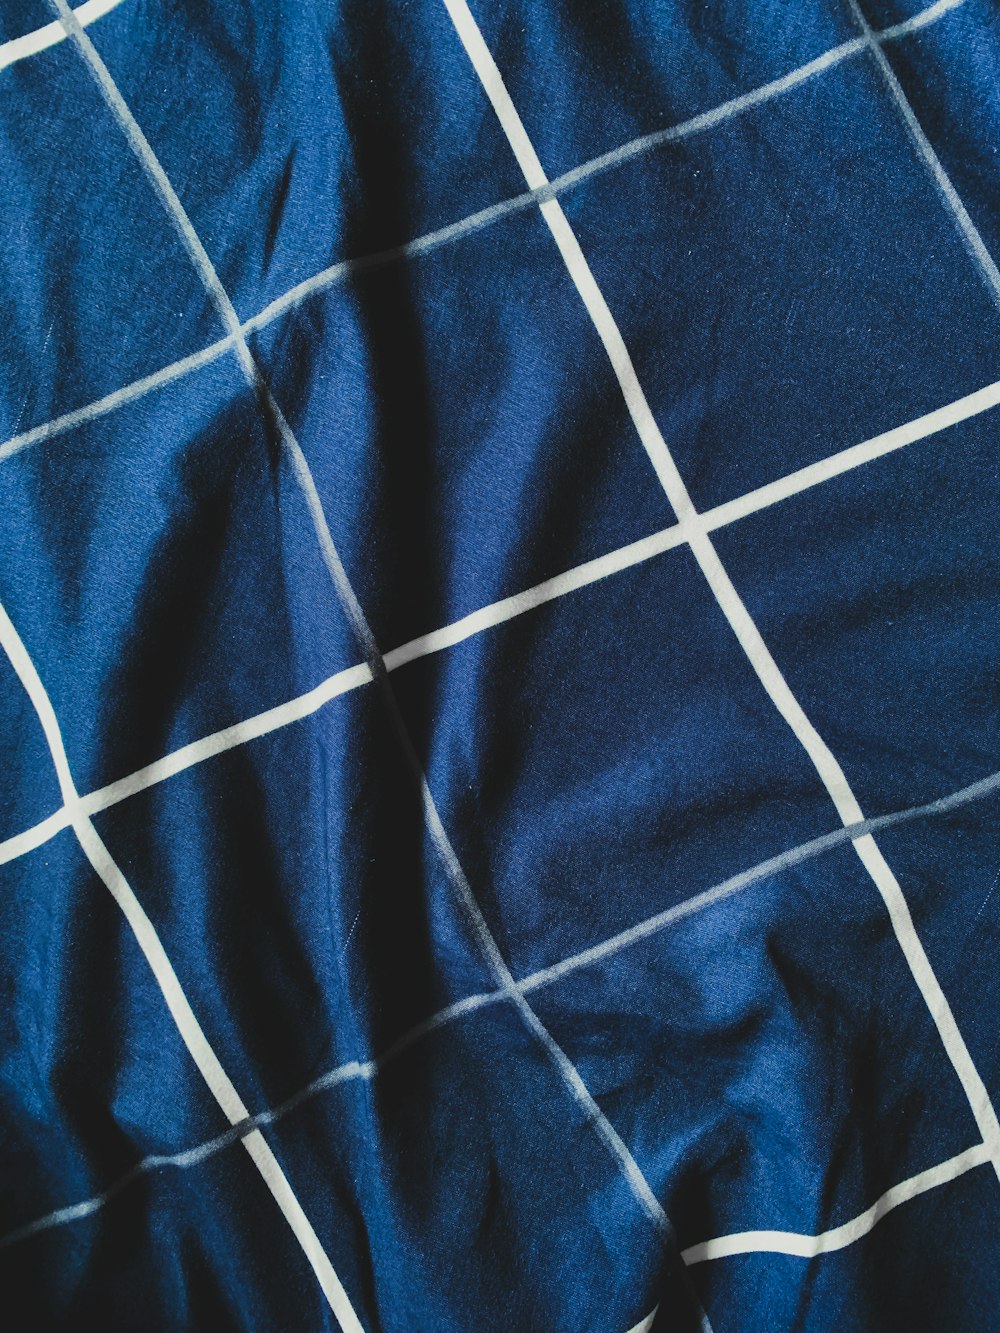 blue and white stripe textile